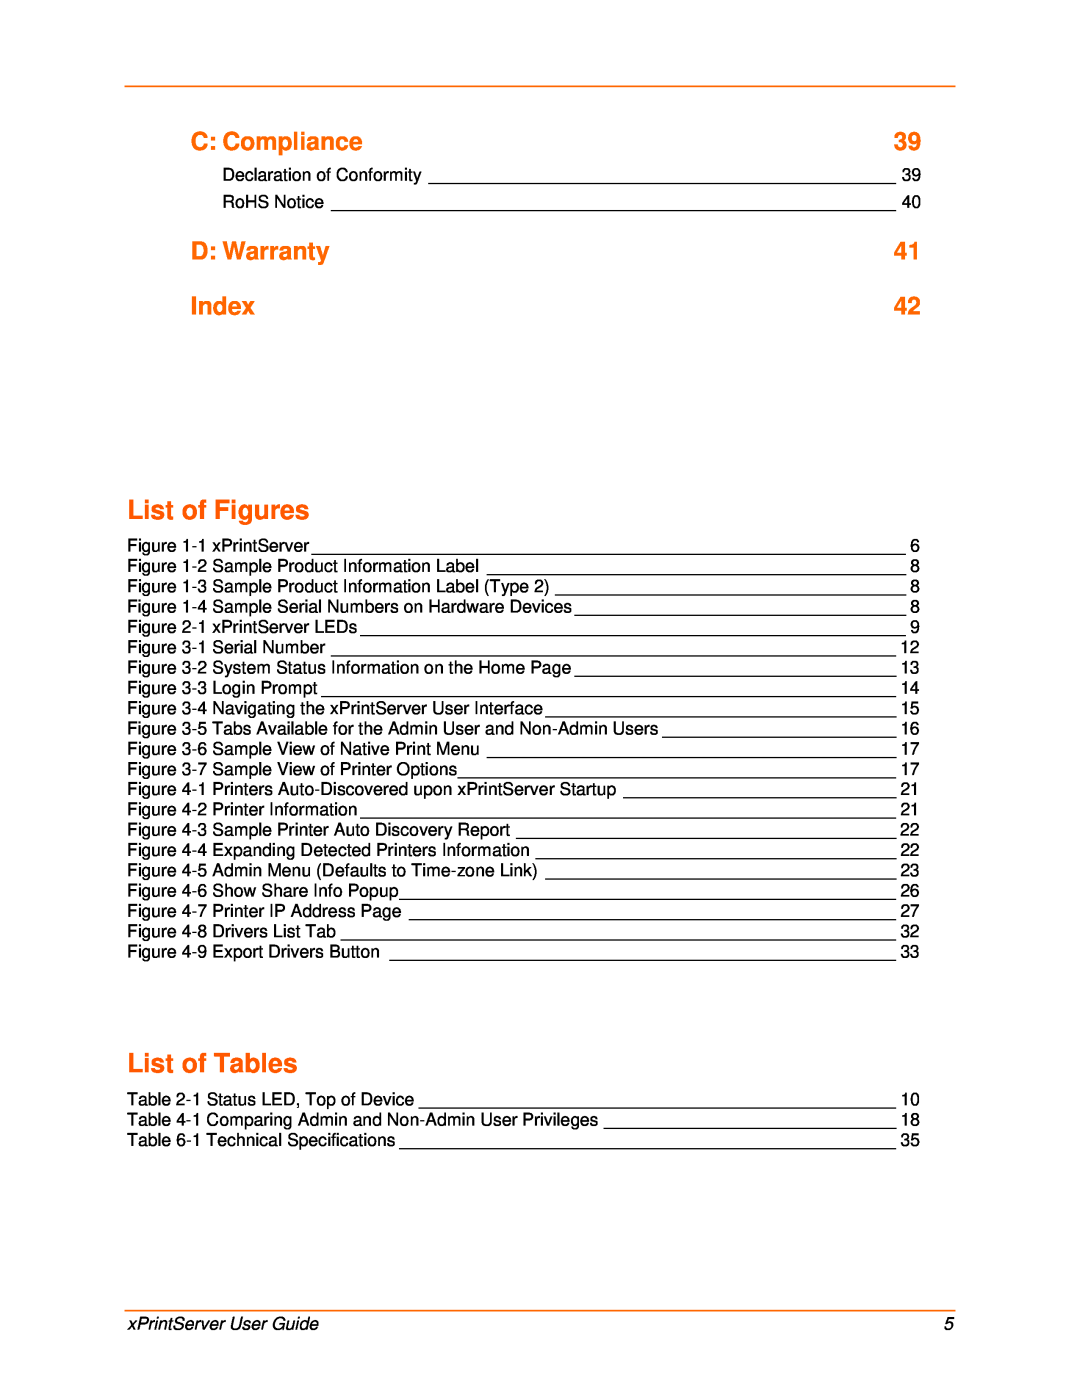 Lantronix 900-603 manual List of Figures, List of Tables, C Compliance, D Warranty, Index, xPrintServer User Guide 